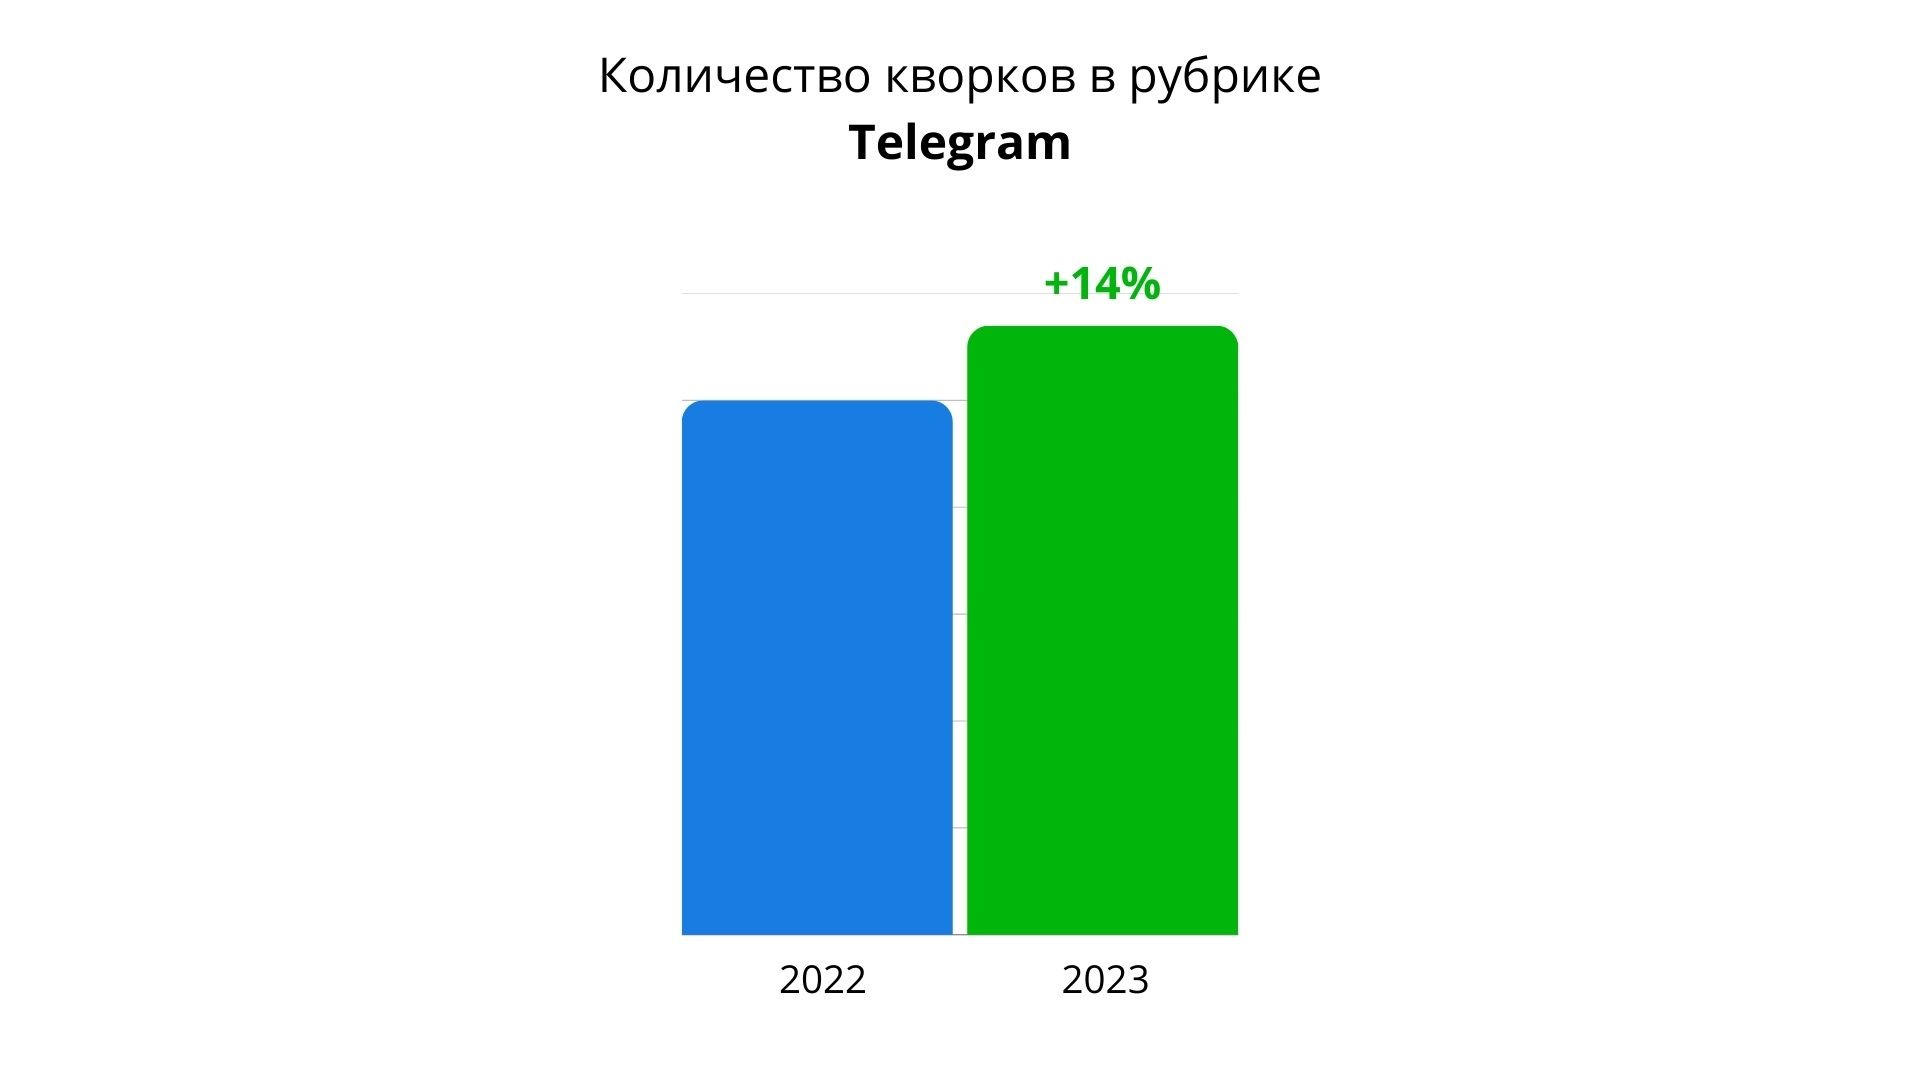 Фрилансер 2023